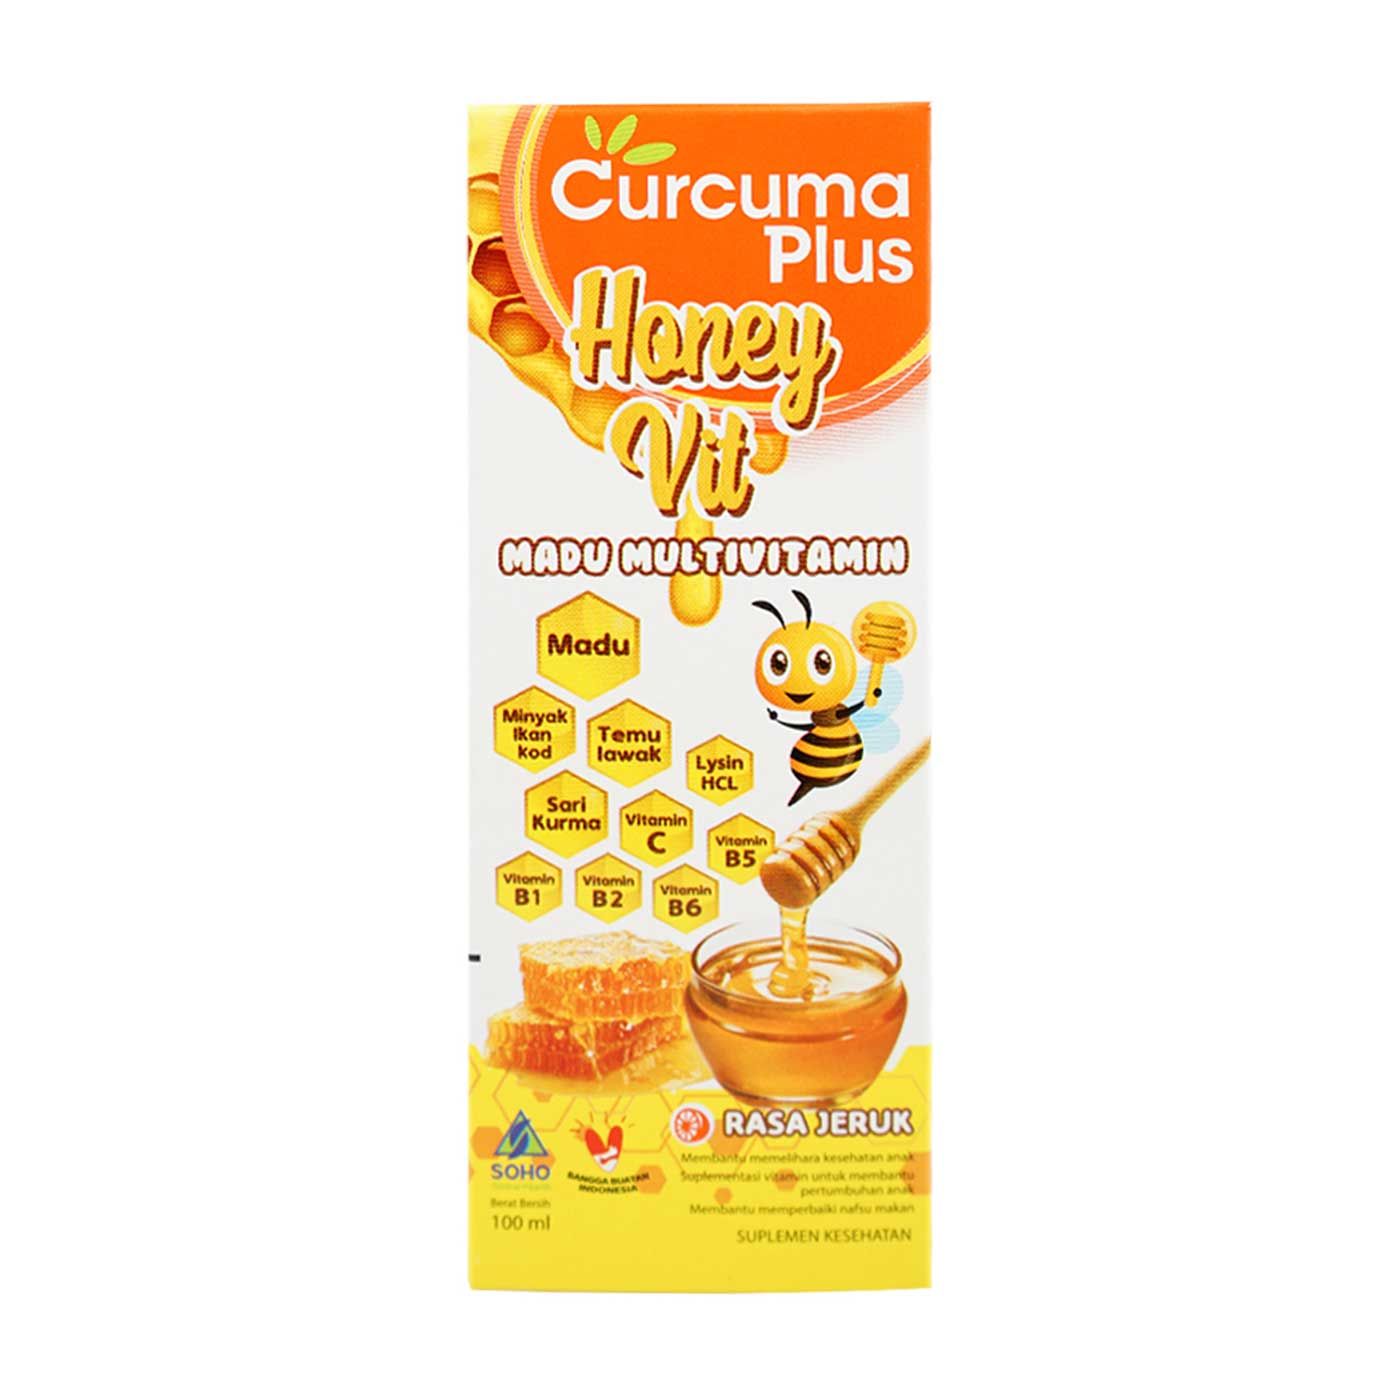 Curcuma Plus Honey Vit - Multivitamin Madu Rasa Jeruk 100ml - 2